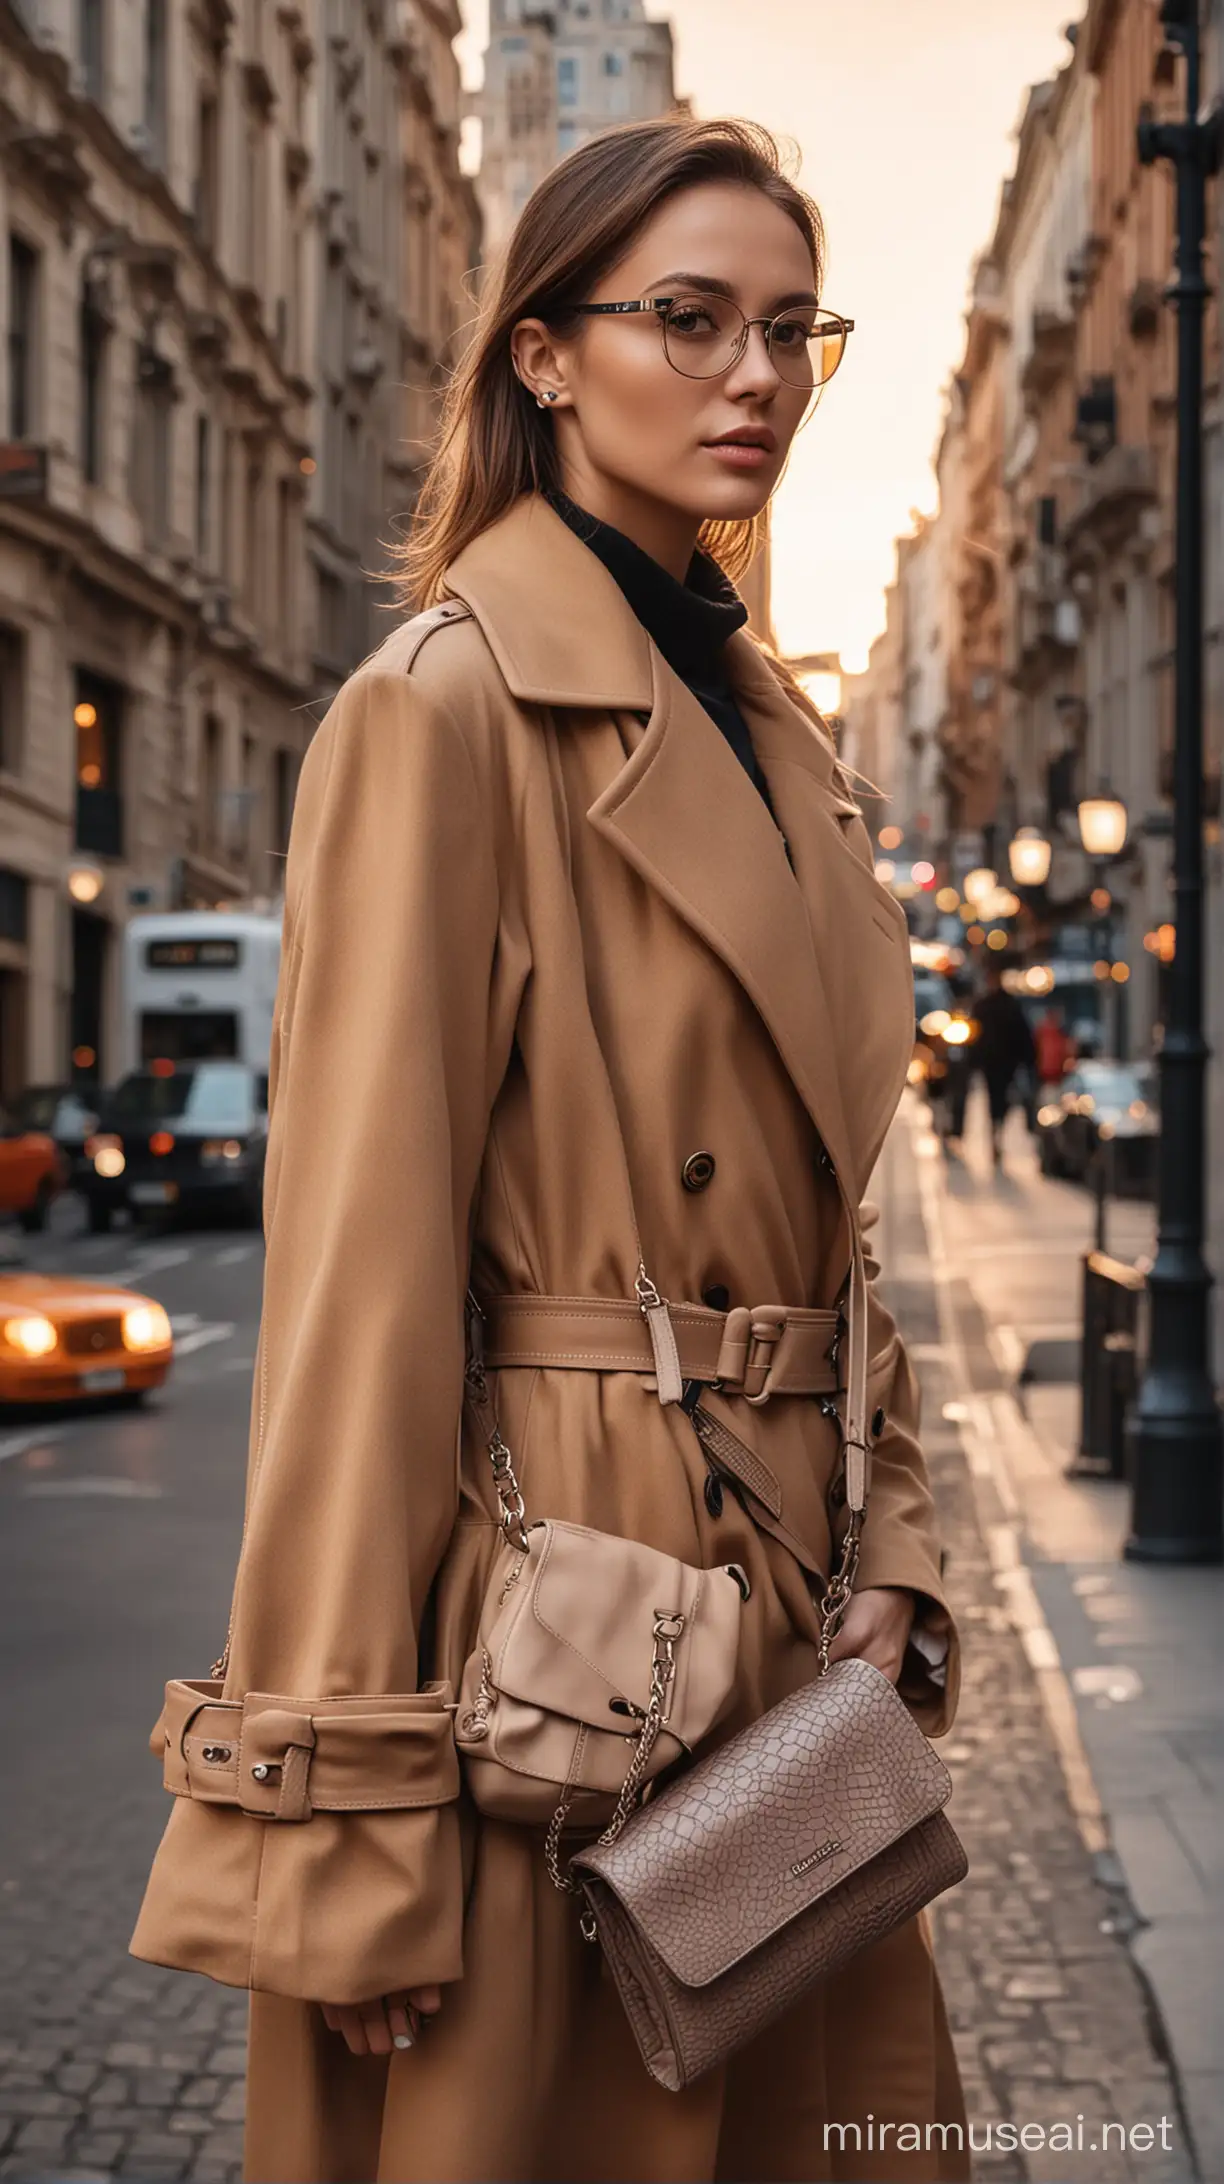 Sophisticated Woman with Nadyva Bag Urban Chic Fashion Portrait